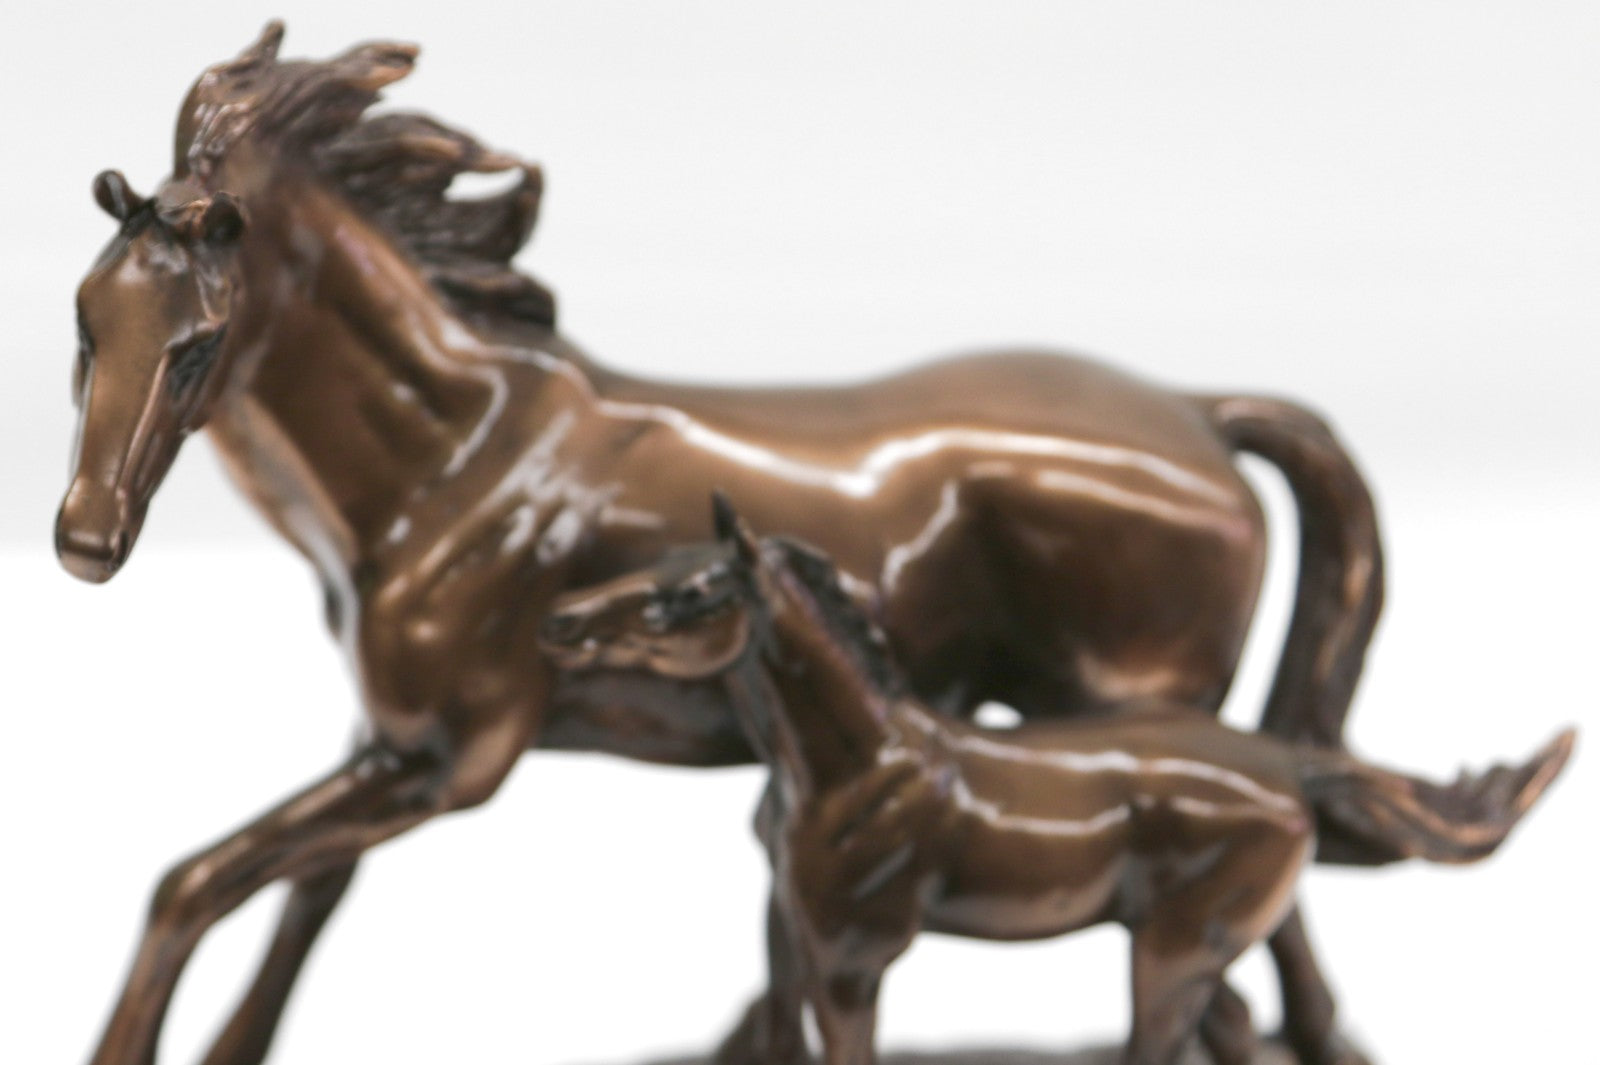 Vintage Wild Mare and Colt Playful Horses Design Bronzed Sculpture Statue